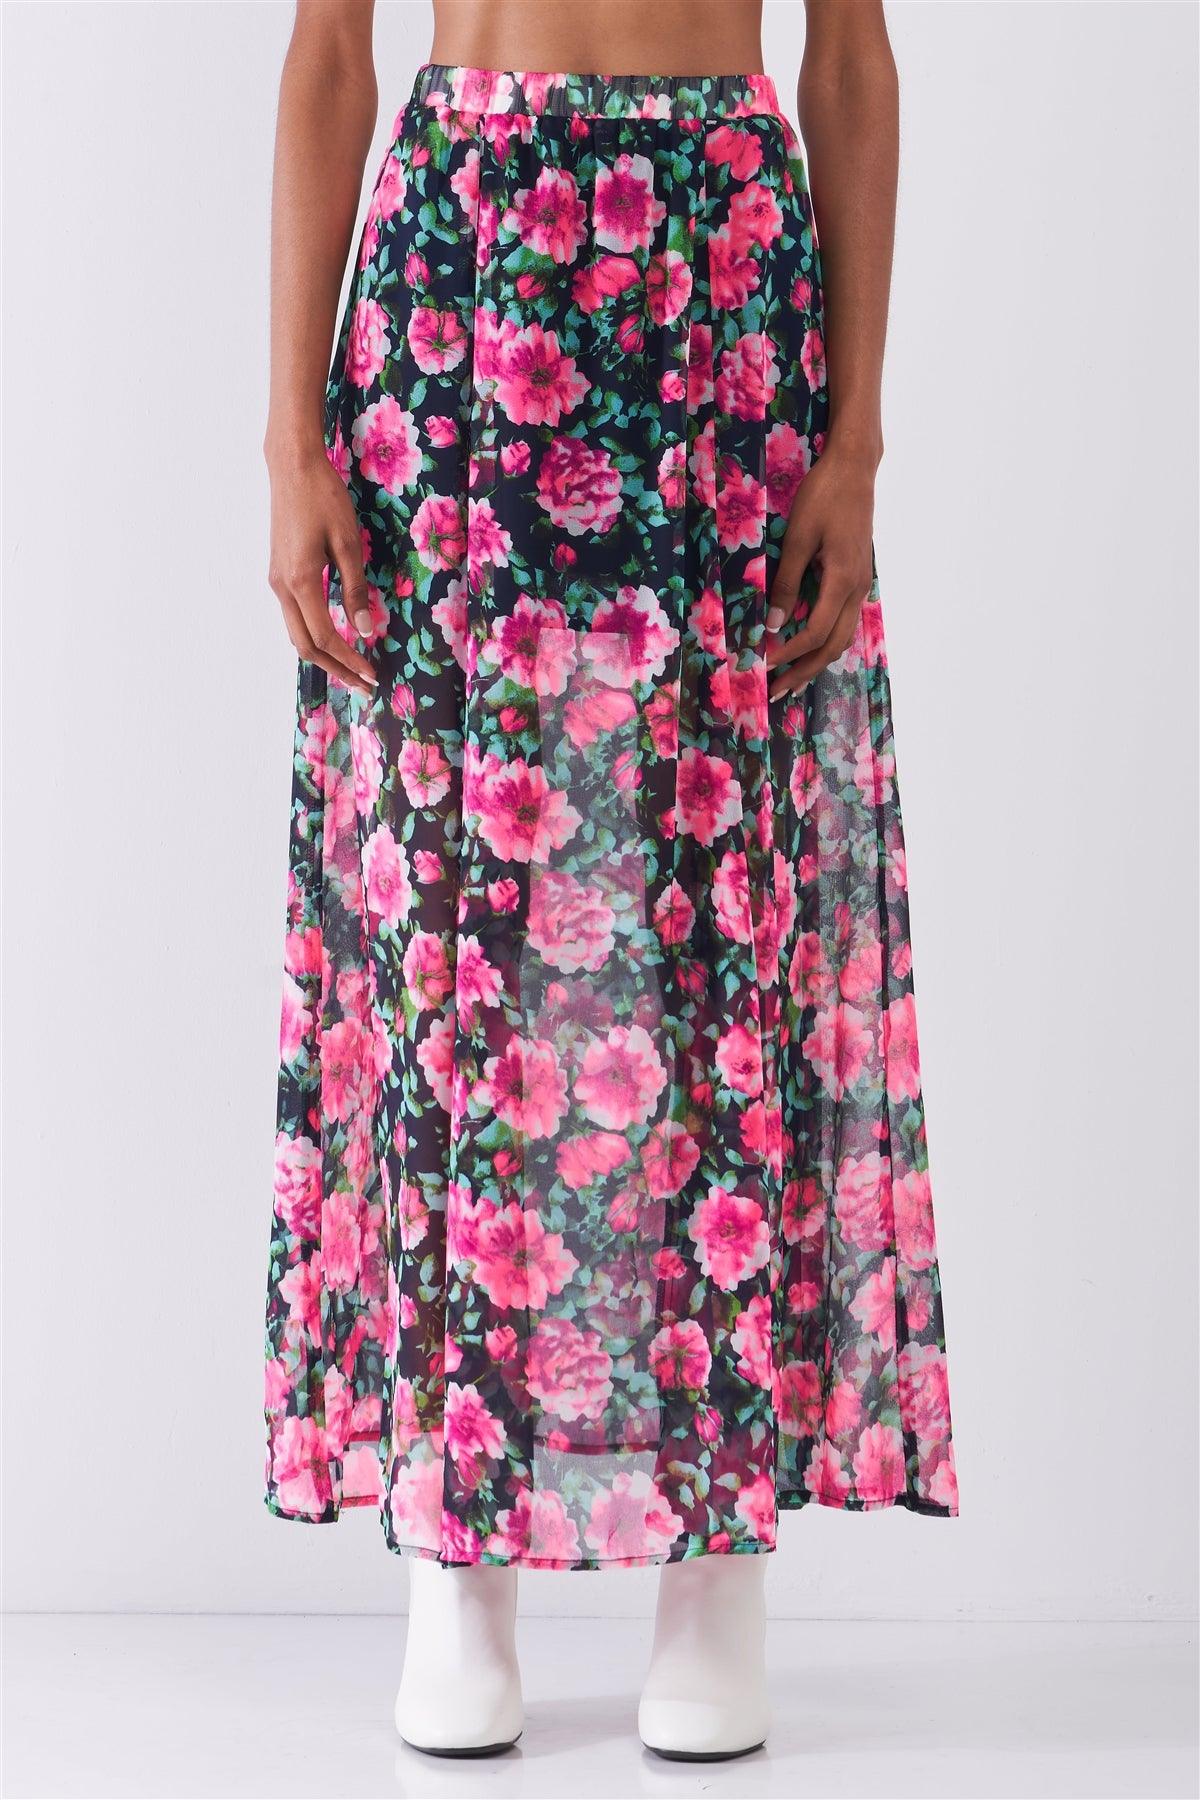 Pink Gardenia Floral Print High Waist Semi-Sheer Maxi Skirt /1-2-2-1-1